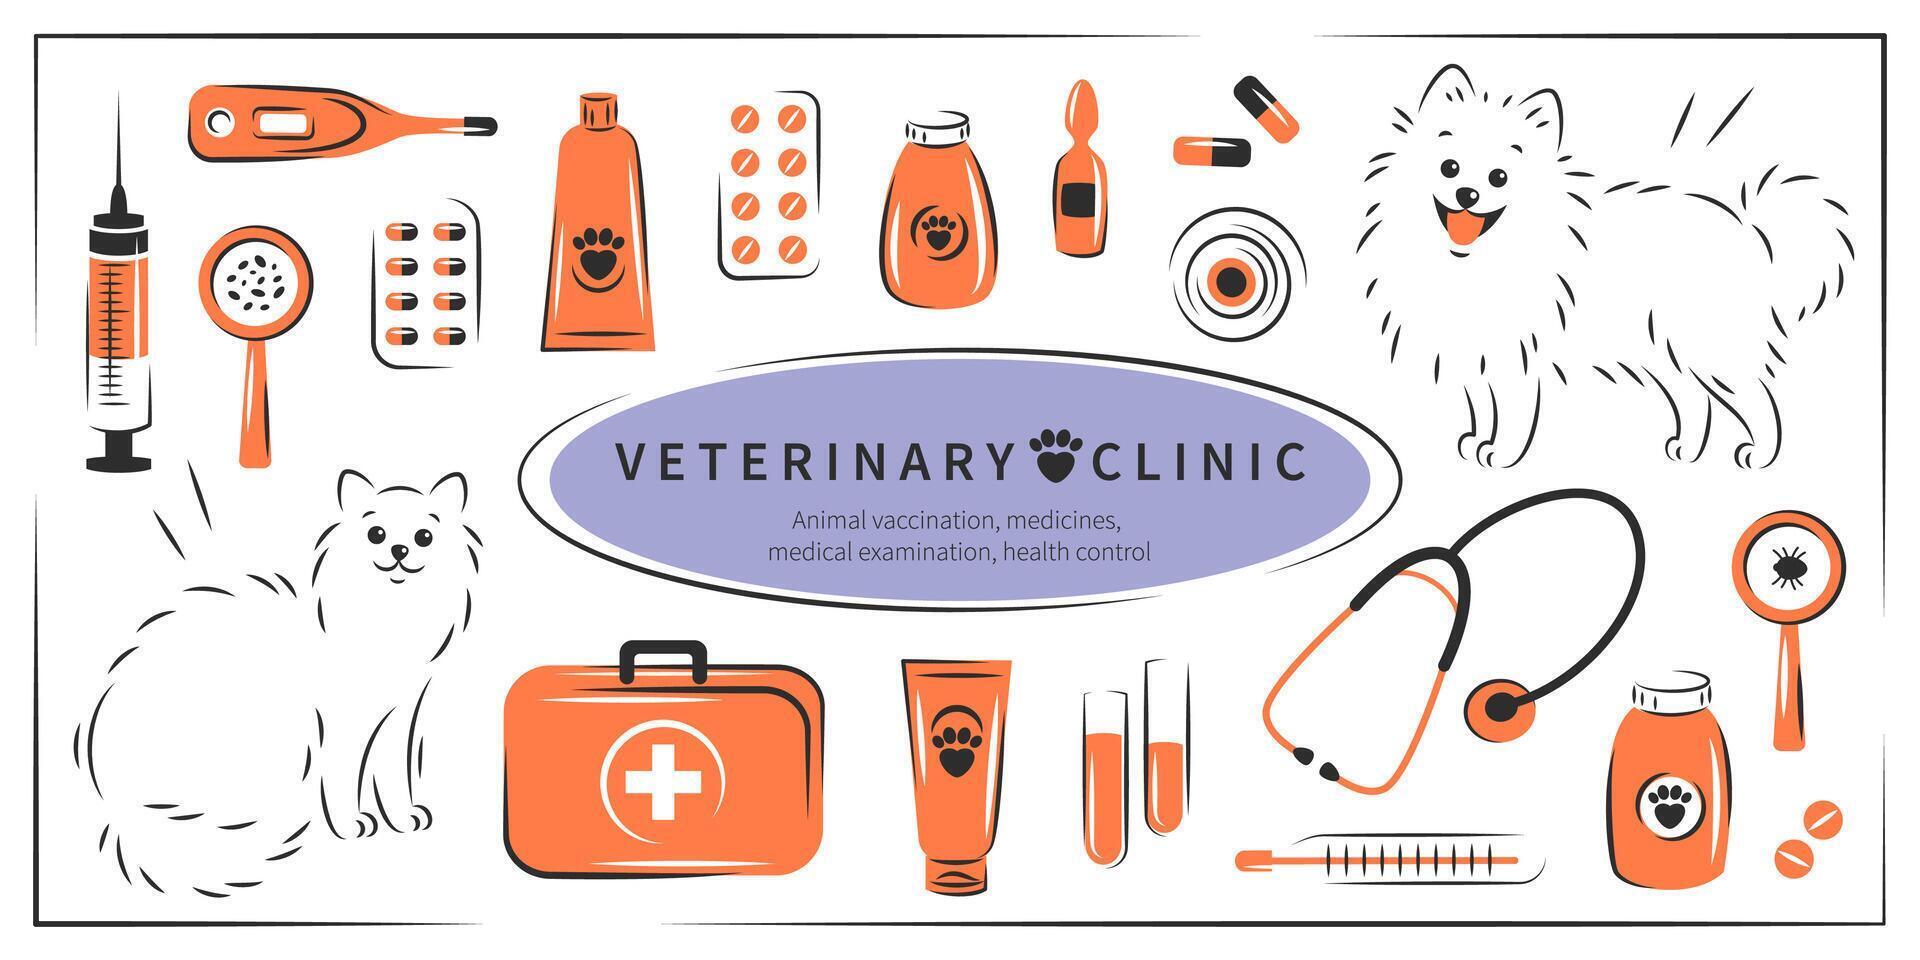 Veterinarian clinic. Big set of tools for veterinary hospital. Animal vaccination, medicines, medical examination, health control, treatment. Vector illustration